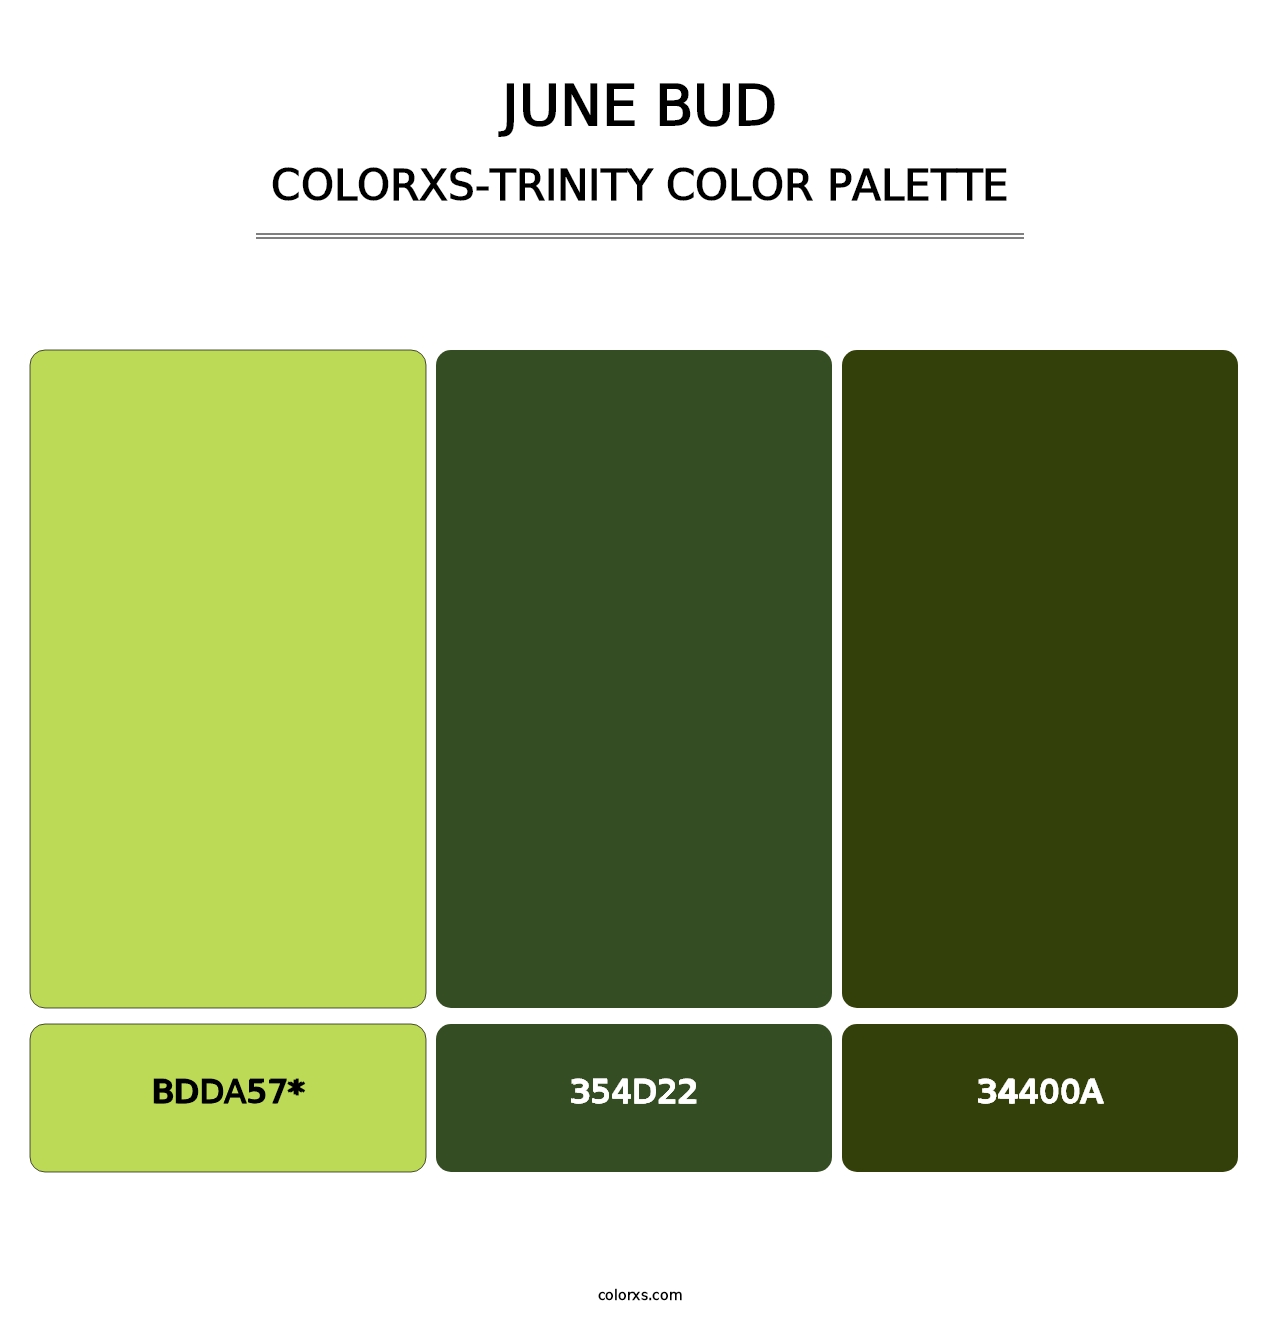 June Bud - Colorxs Trinity Palette